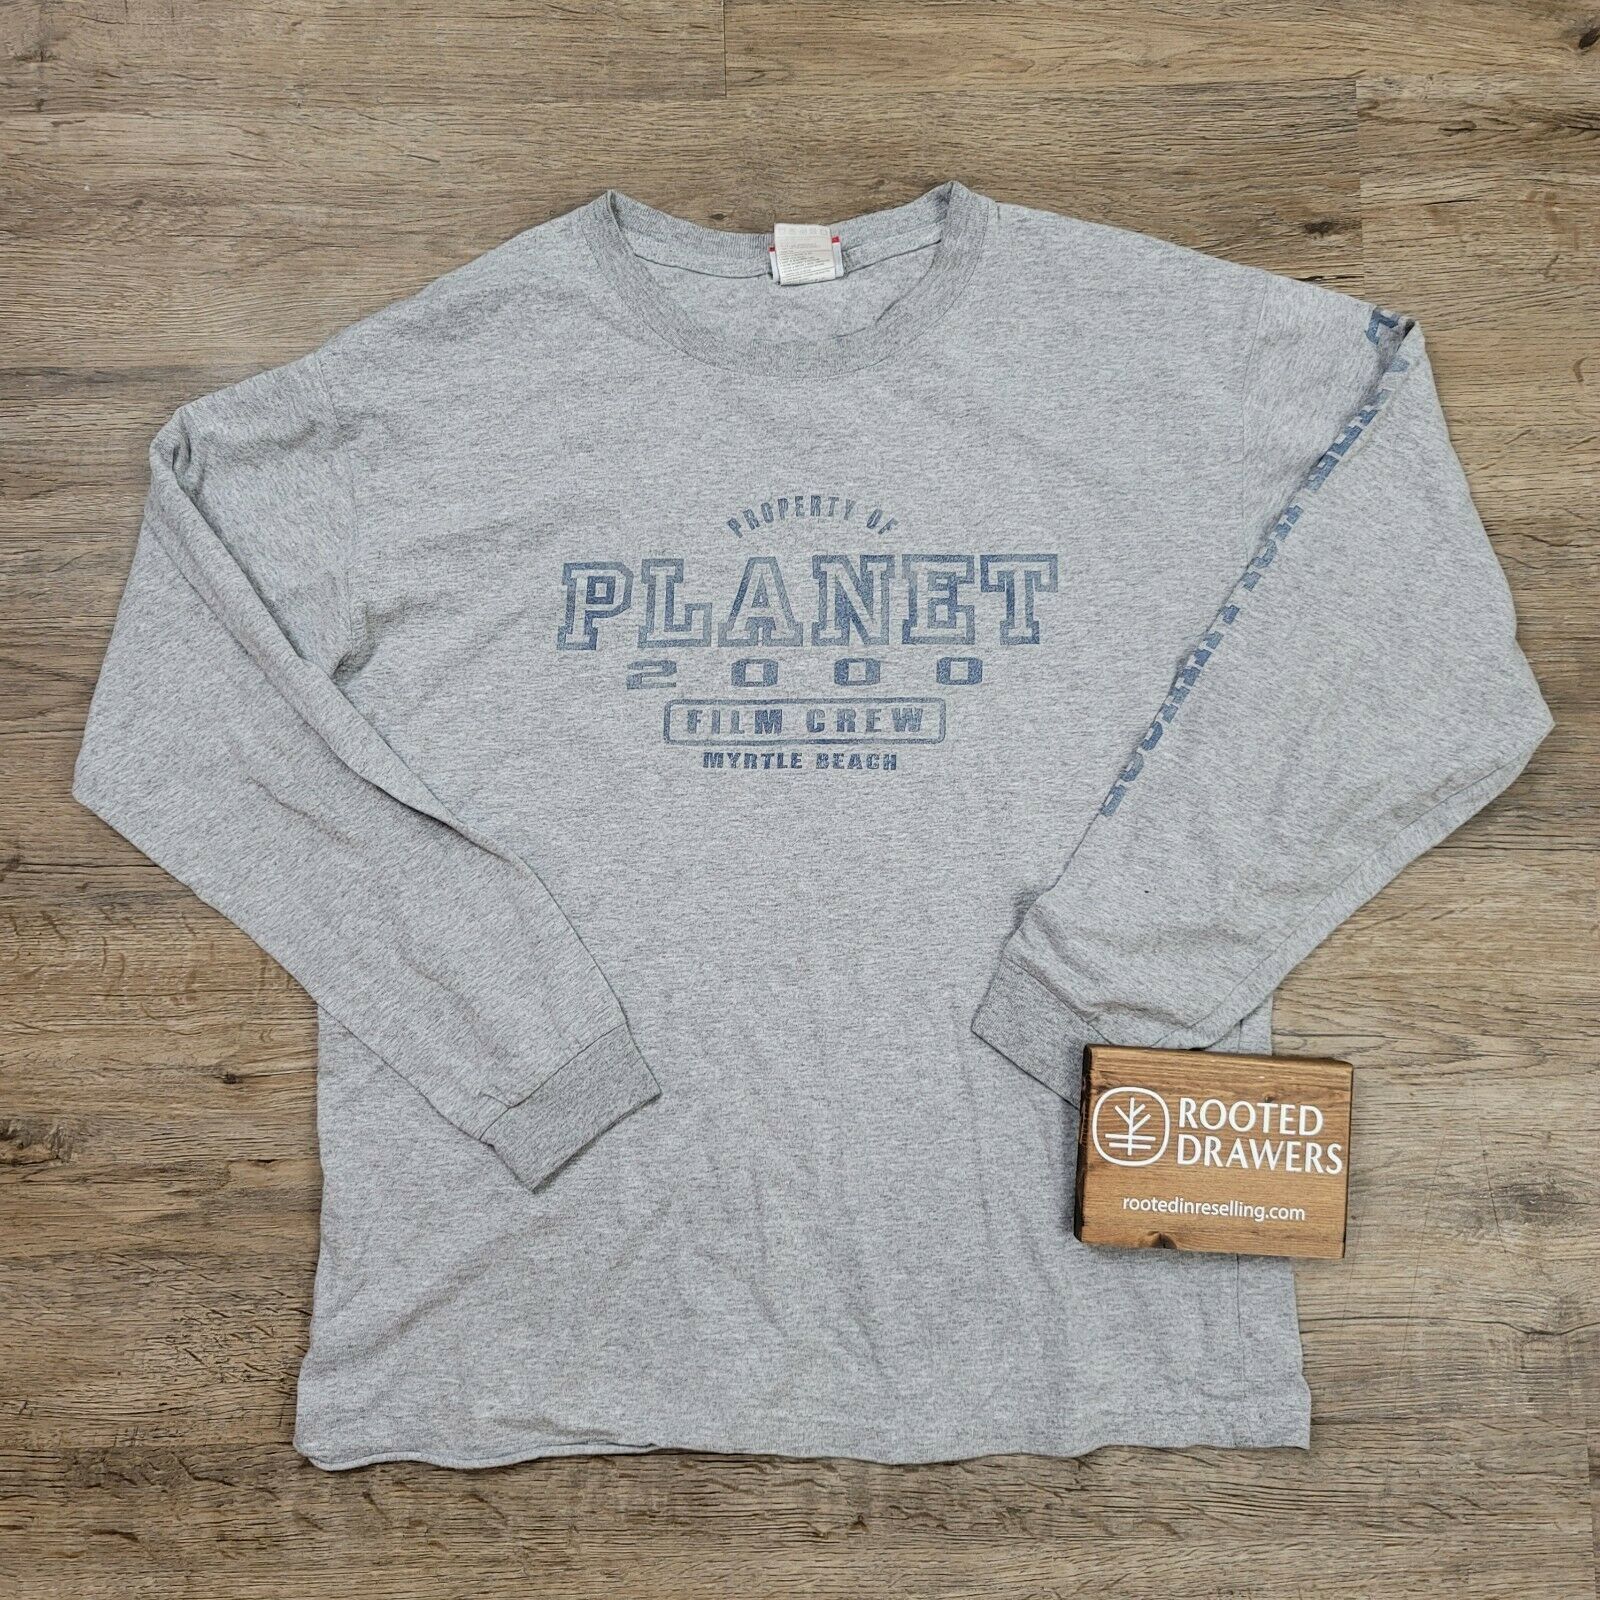 Vintage Planet Hollywood 2000 Film Crew Myrtle Beach T-Shirt Long Sleeve Gray 98